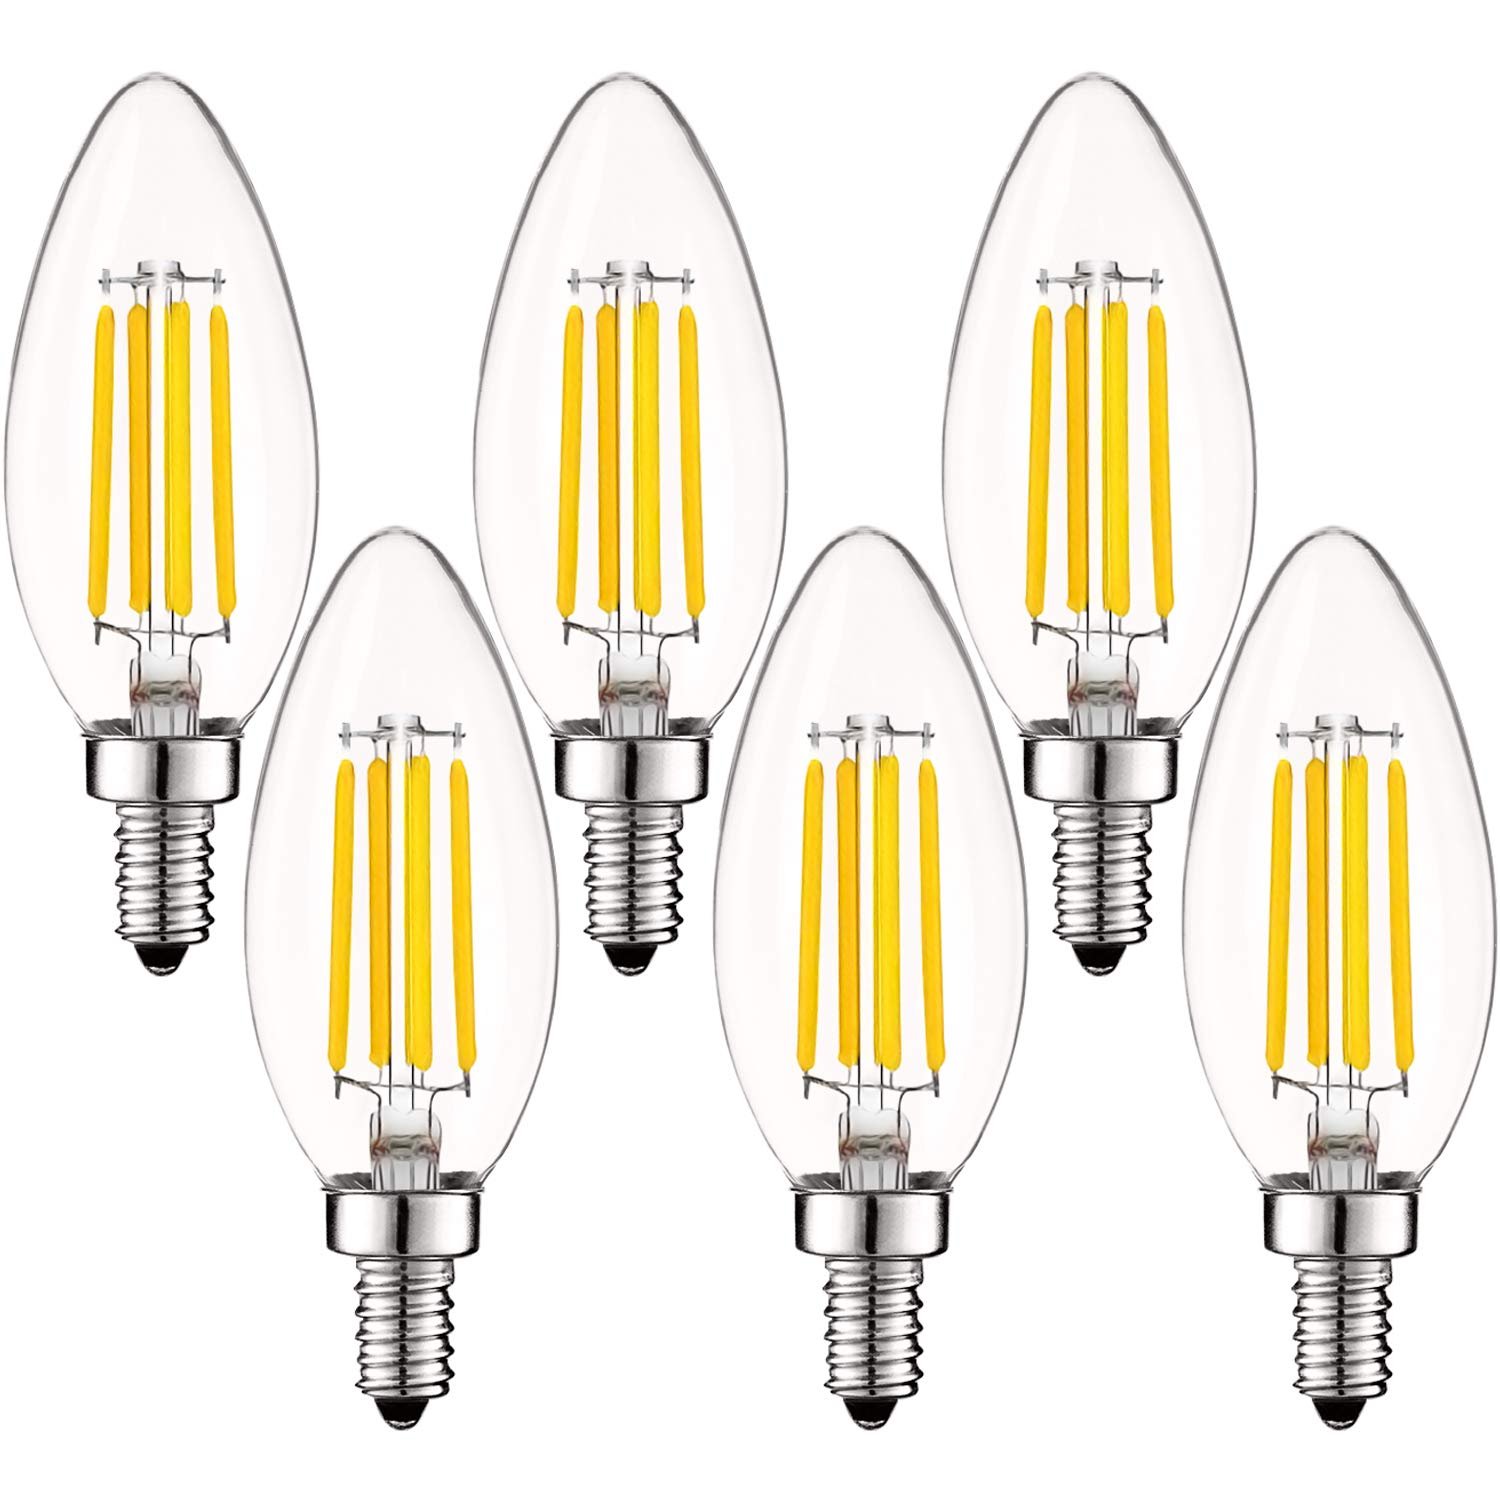 6 Pack Luxrite E12 LED Bulb 60W Equivalent 3000K 550lm Dimmable Candelabra Bulb eBay